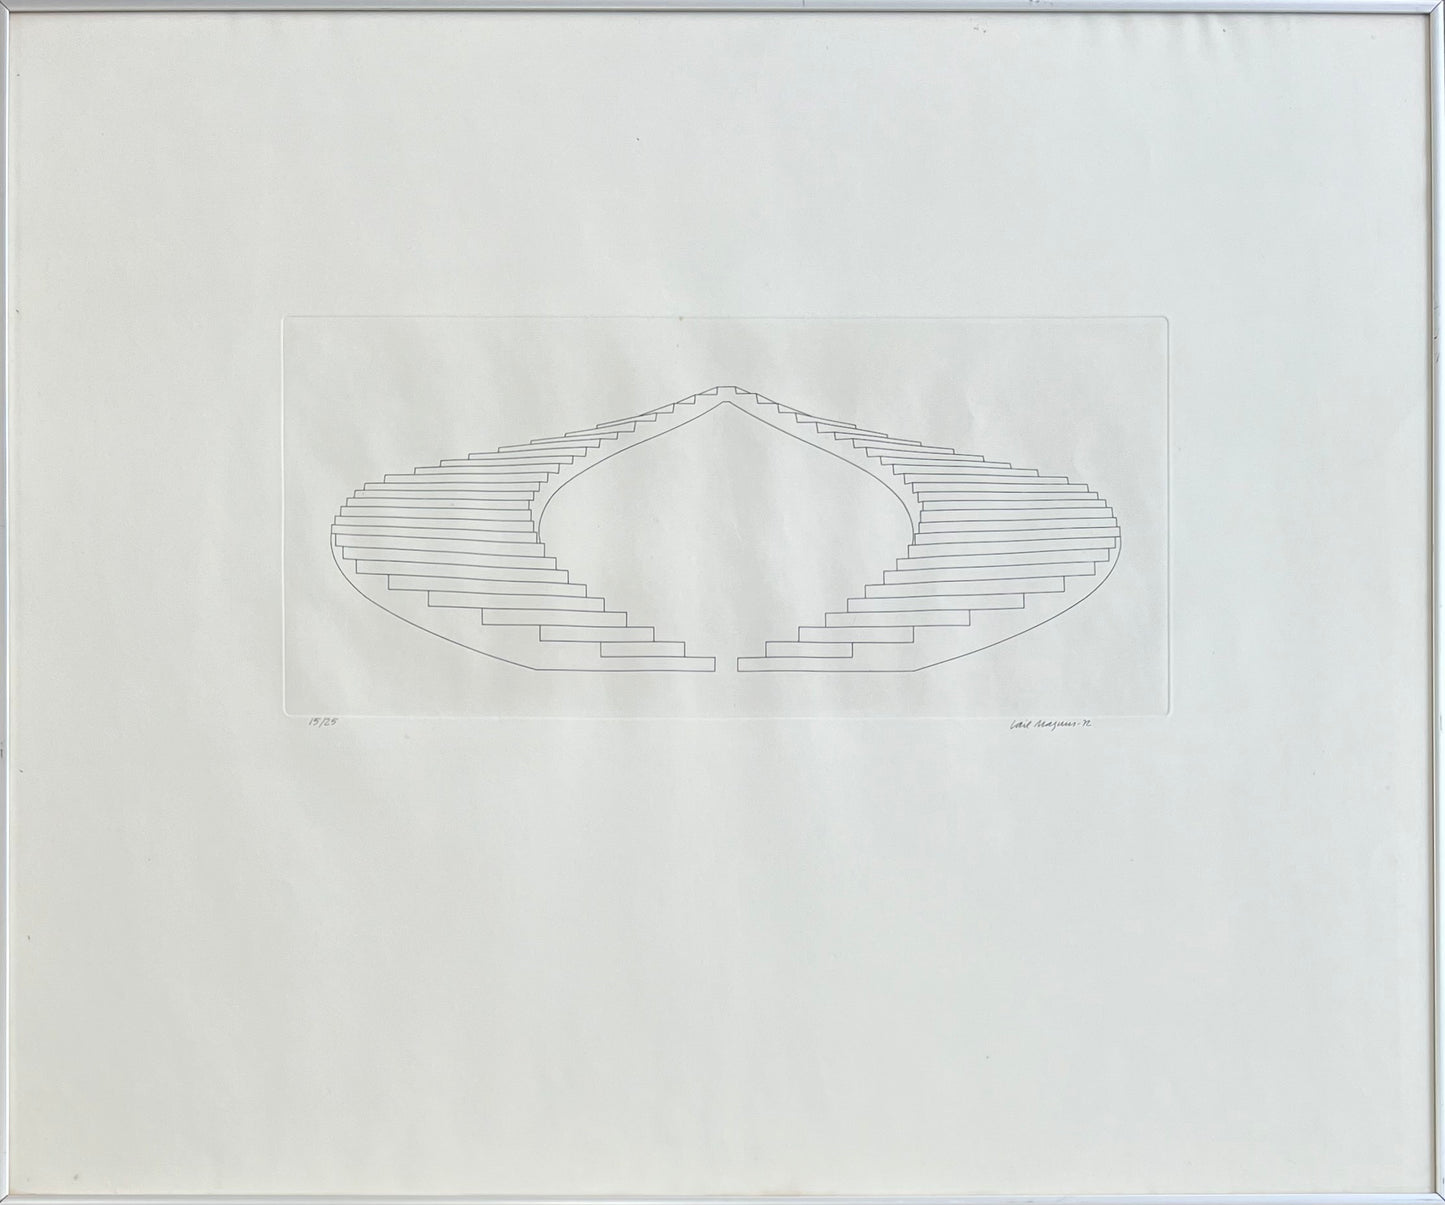 Carl Magnus. Composition, 1972